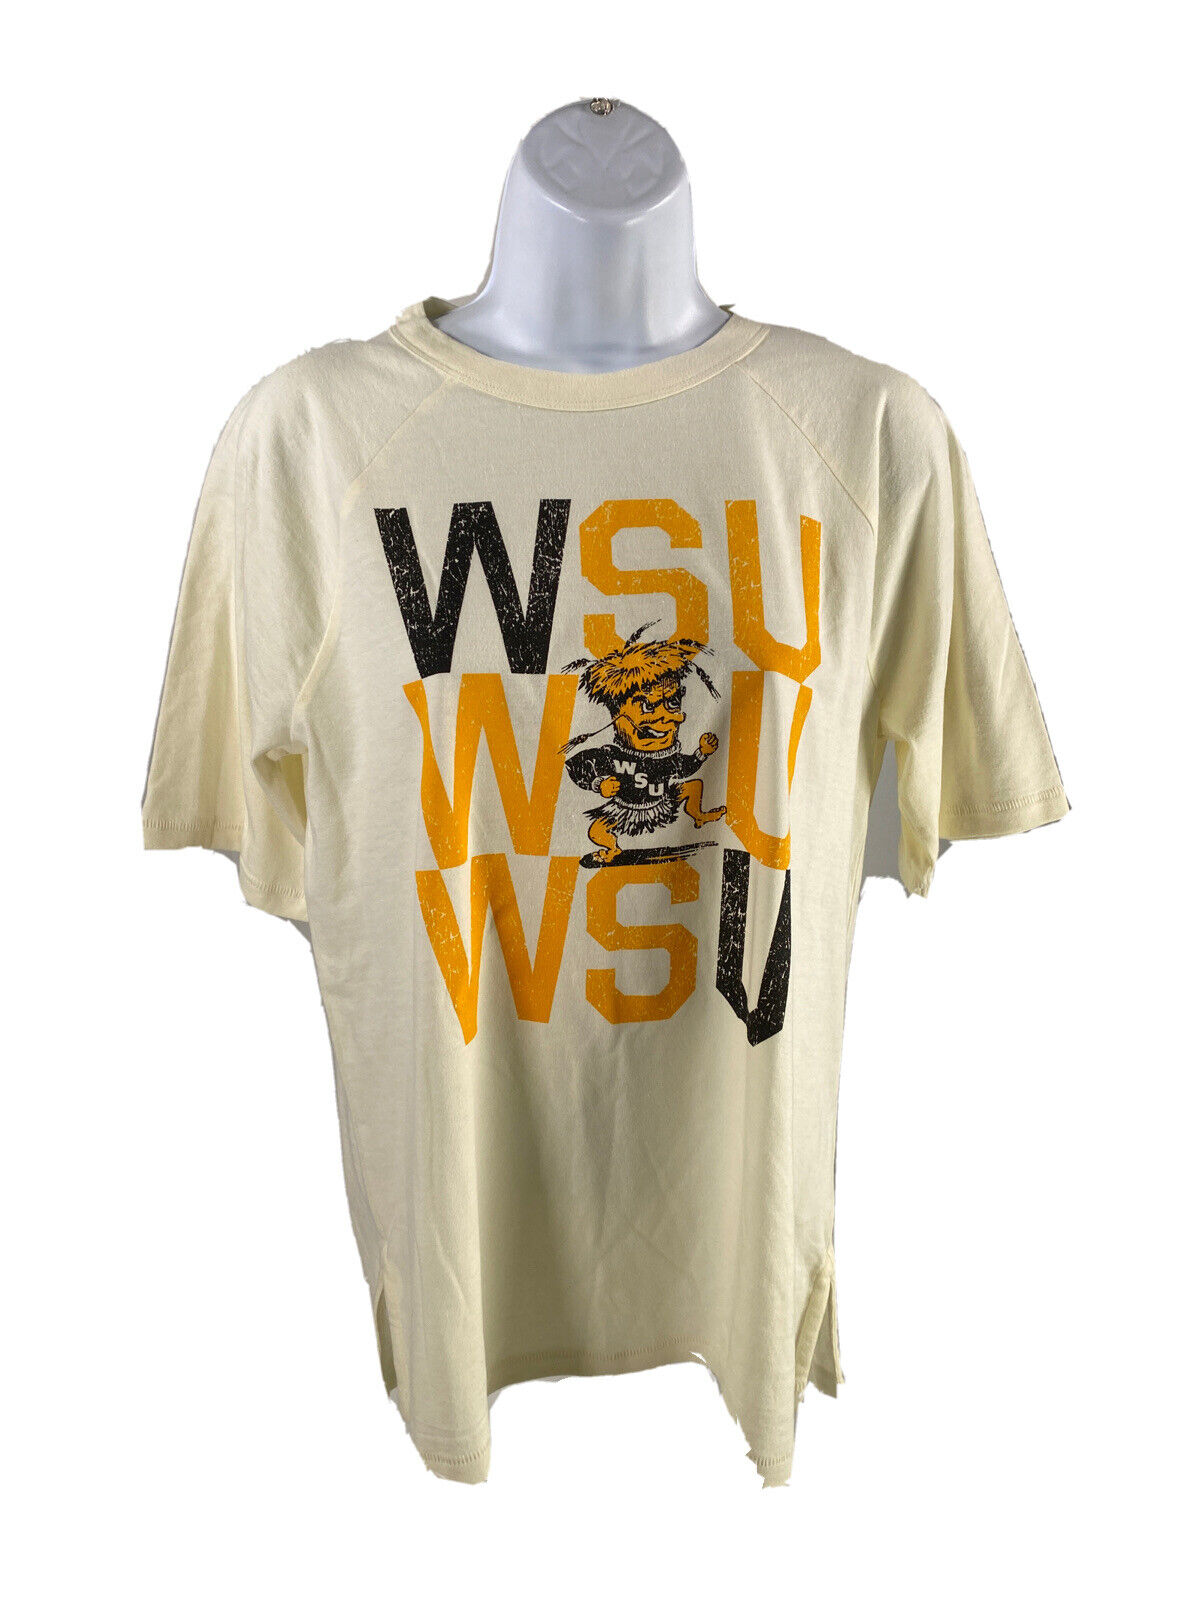 NEW Under Armour Womens Light Yellow Wichita State University T-Shirt - M